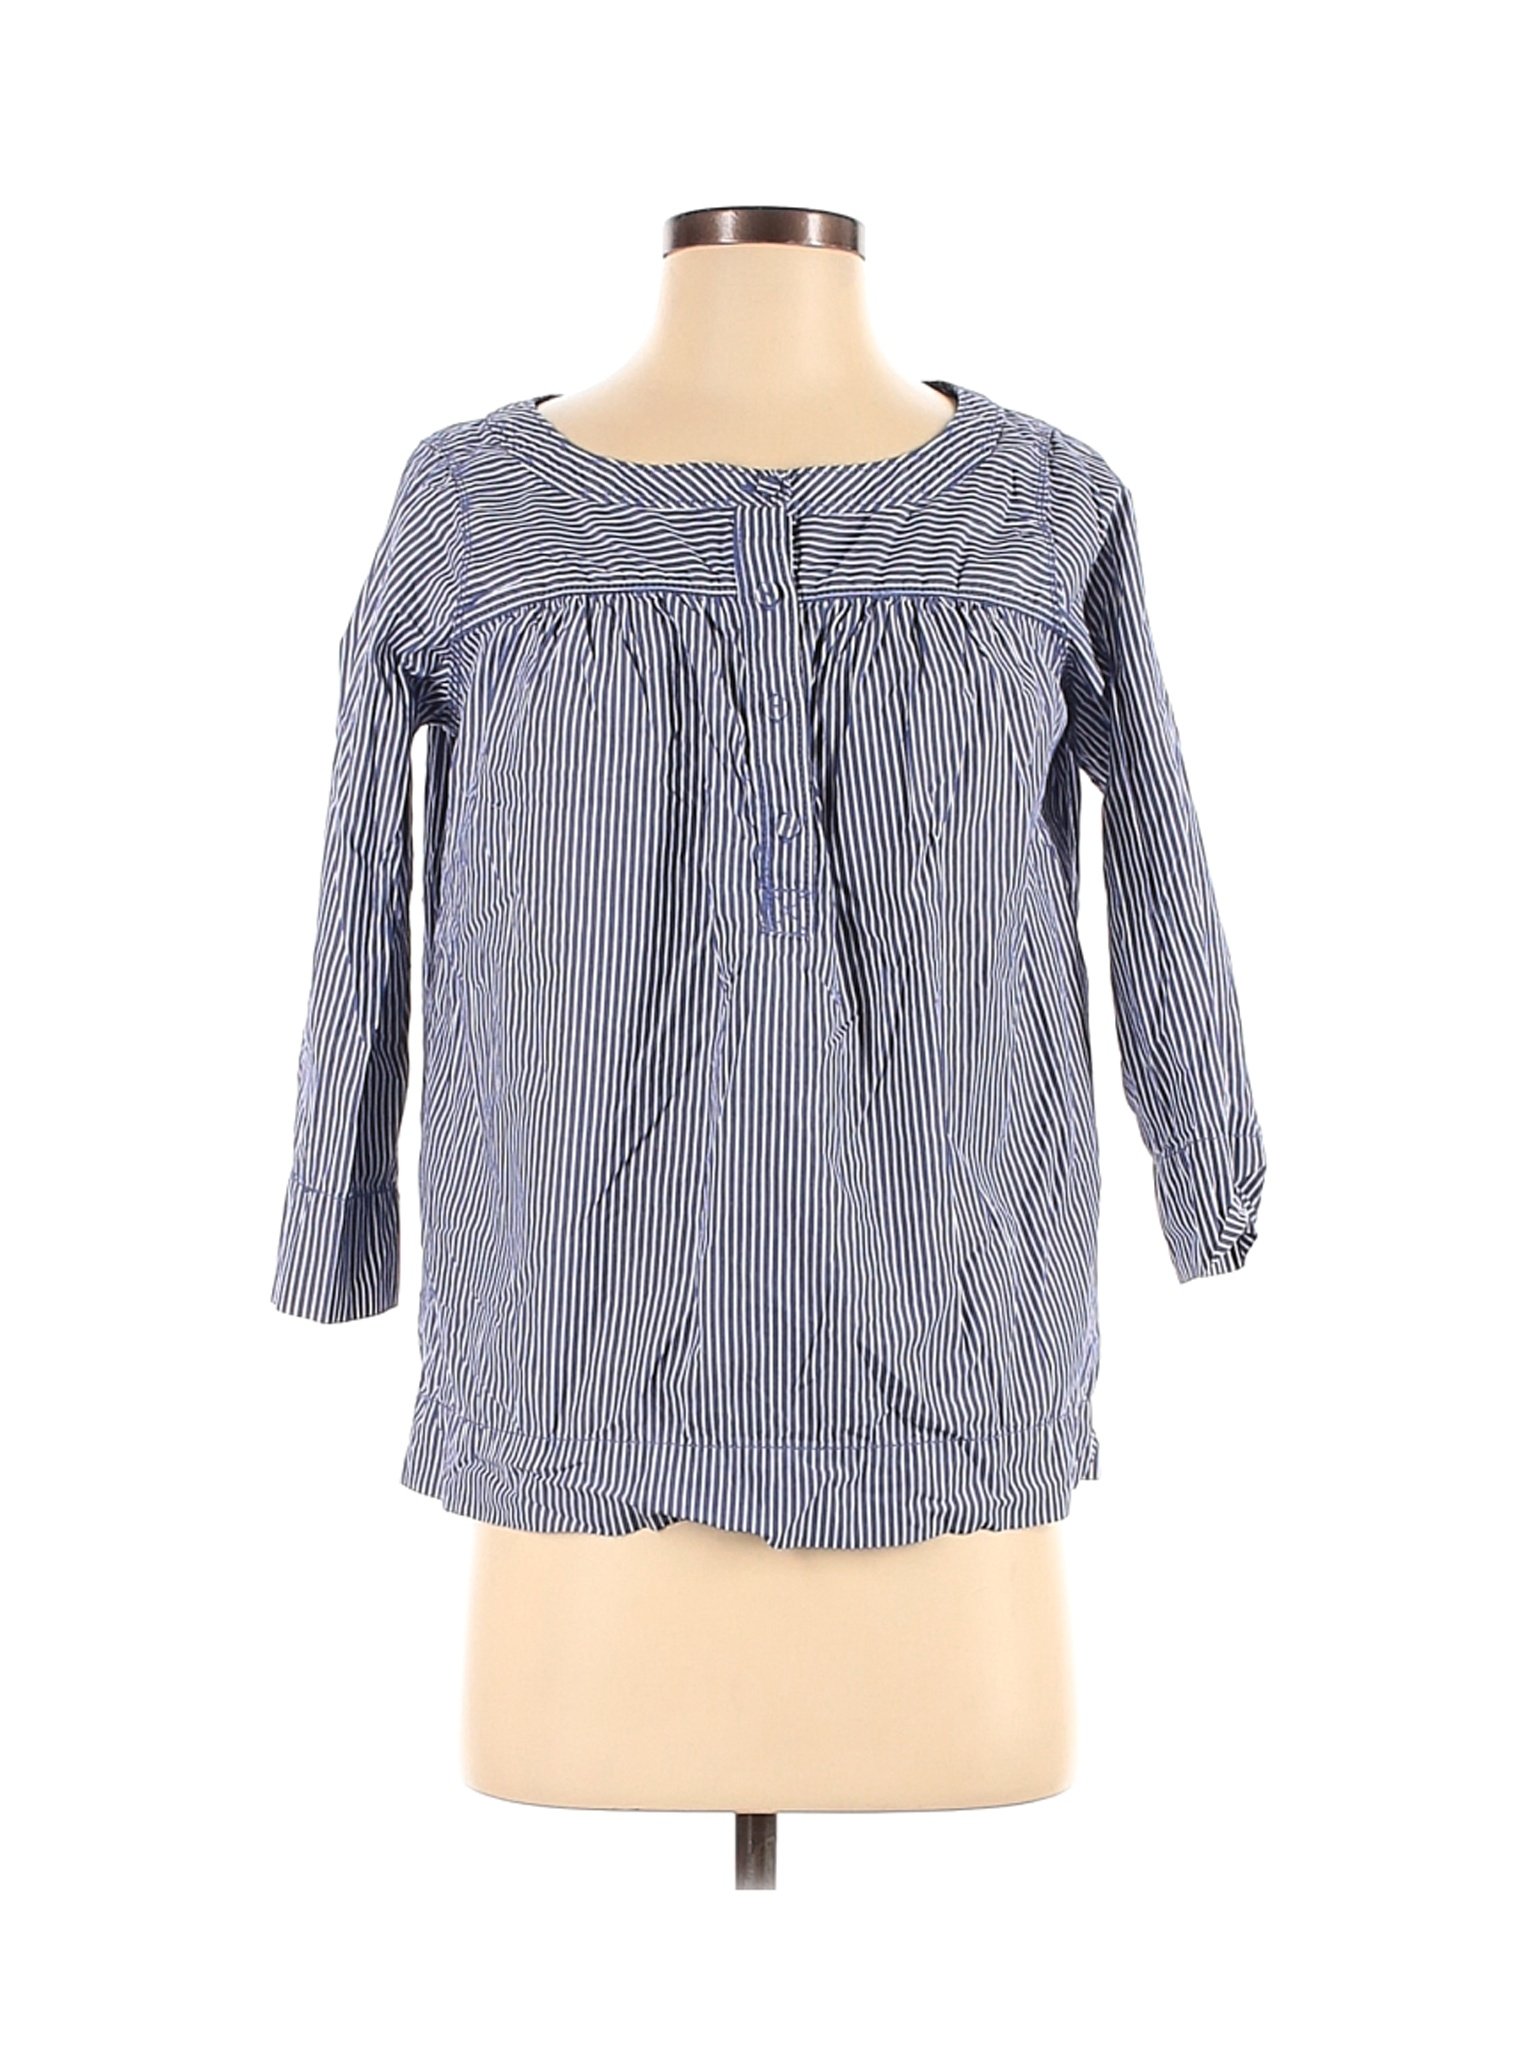 Liz Claiborne Women Blue 3/4 Sleeve Blouse S | eBay